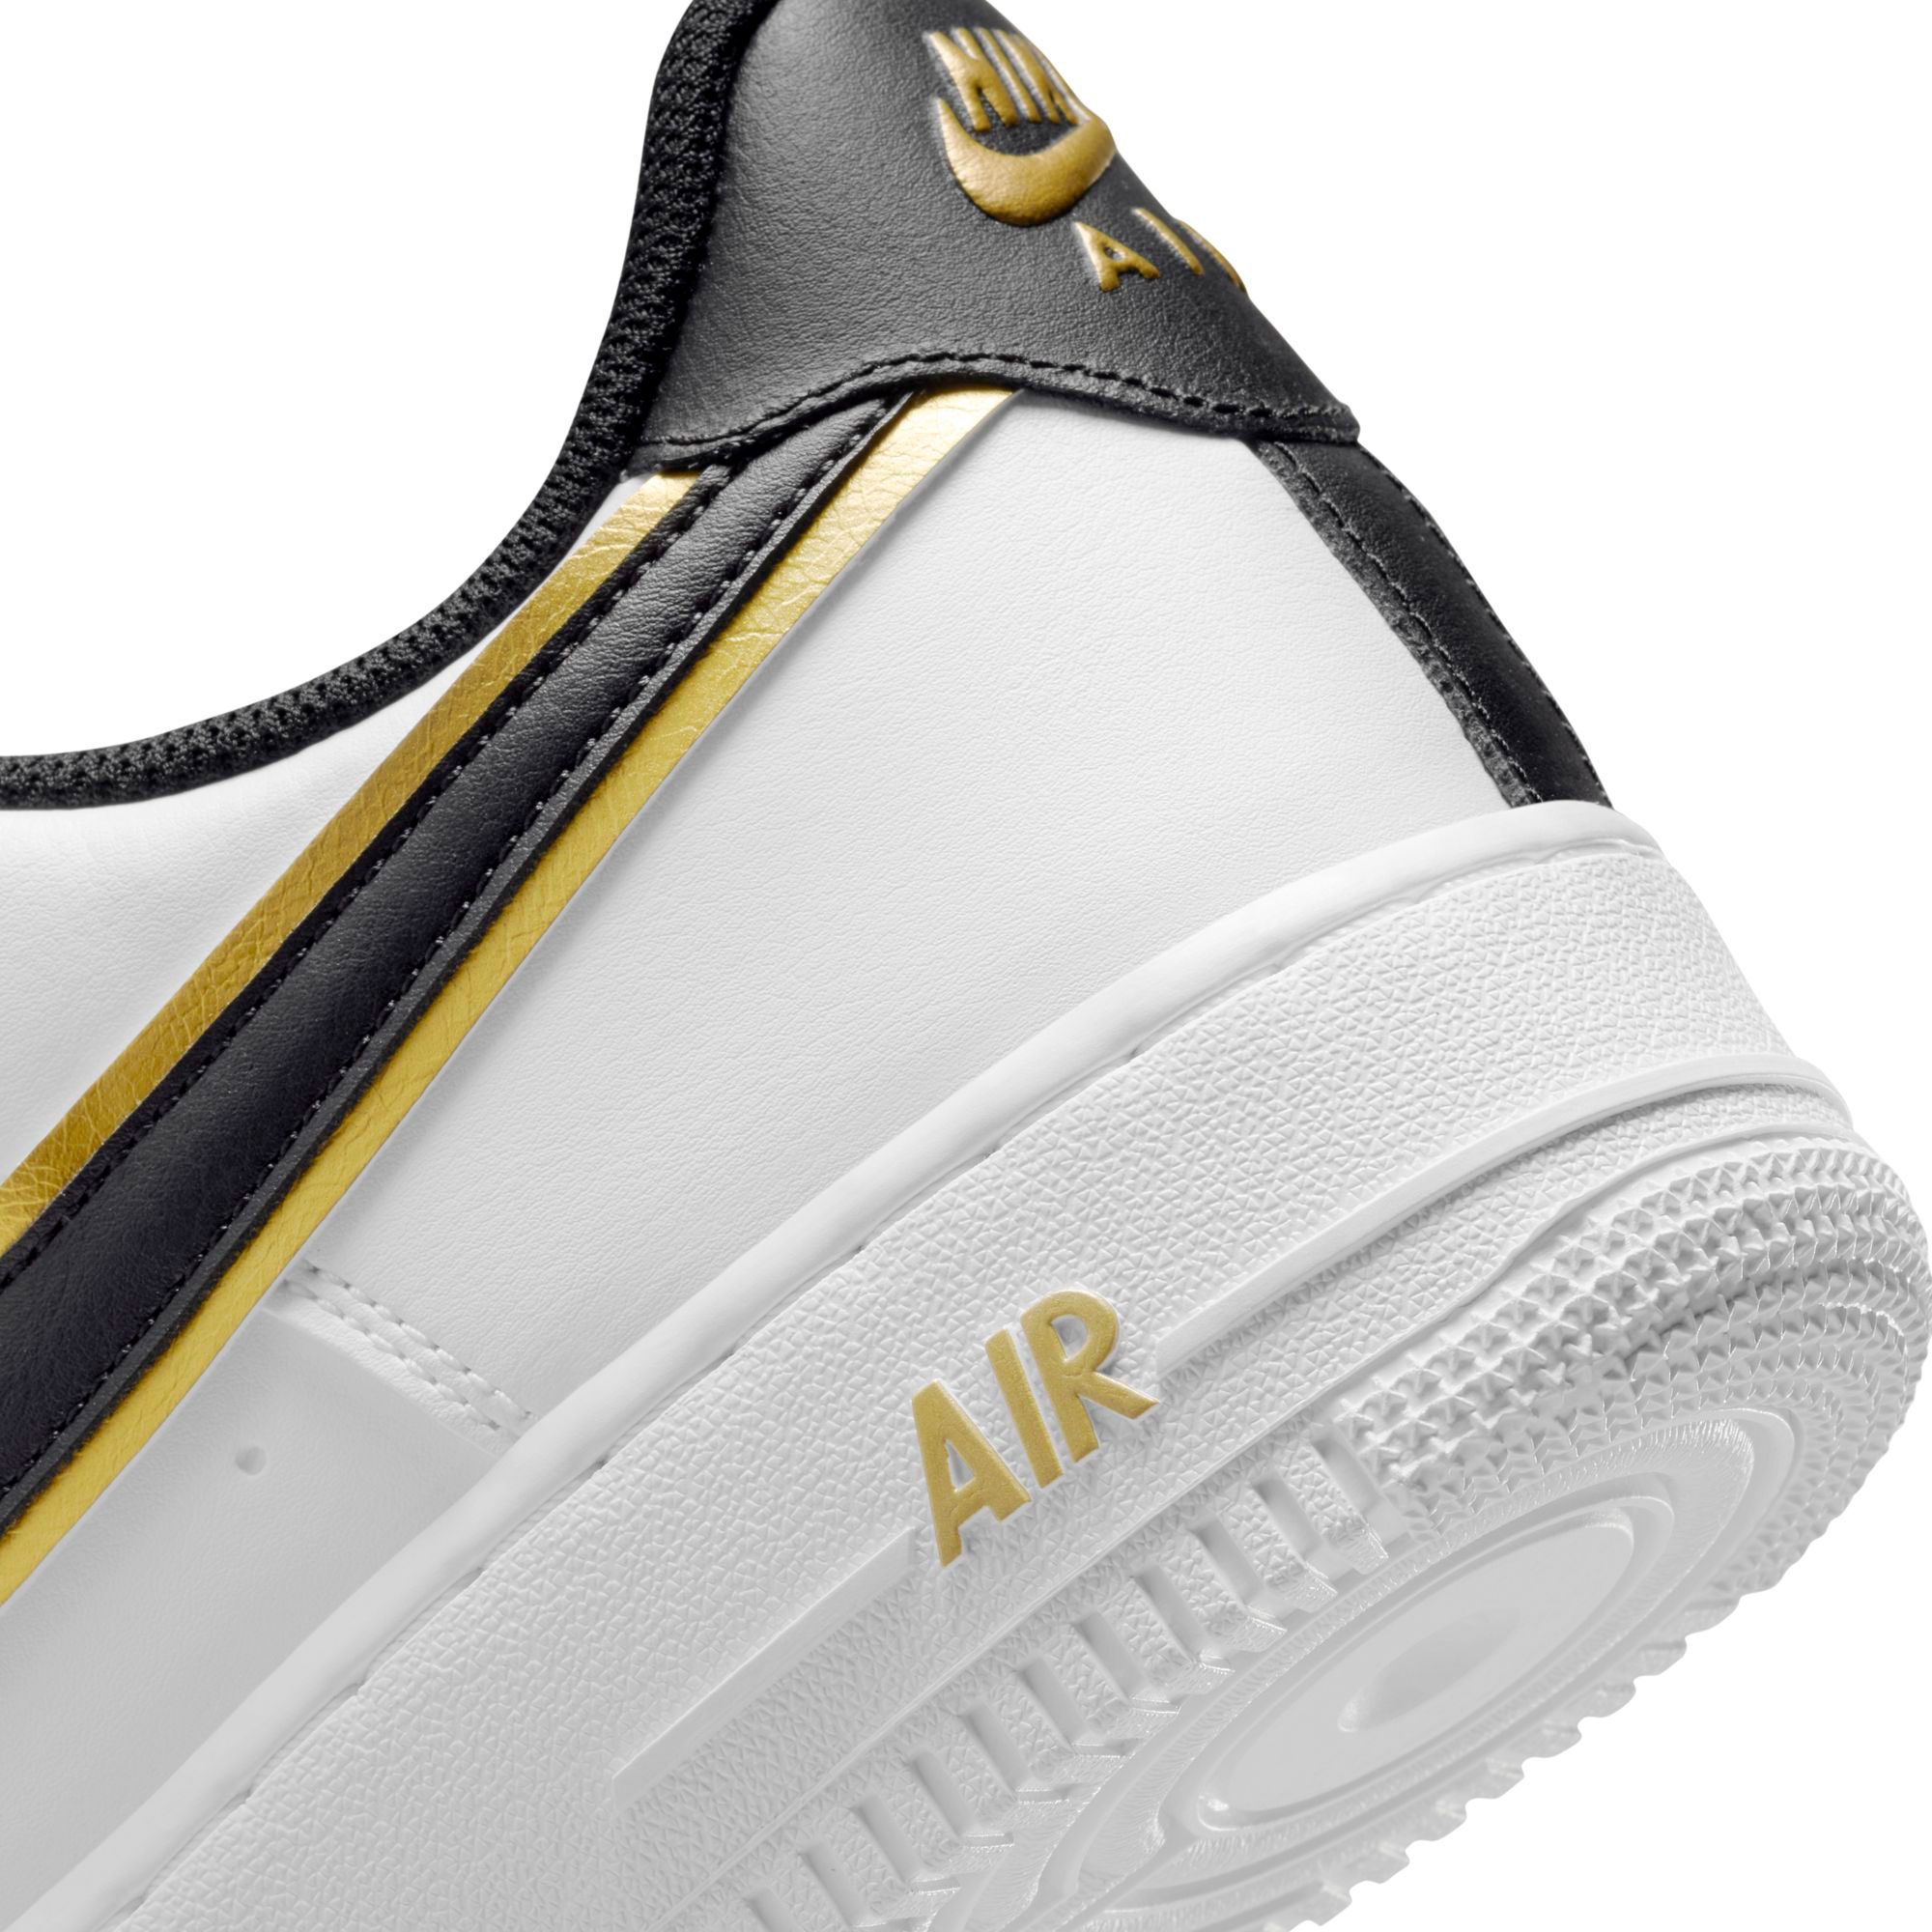 Nike Air Force 1 Black Metallic Gold White - da8481001 for Sale, Authenticity Guaranteed